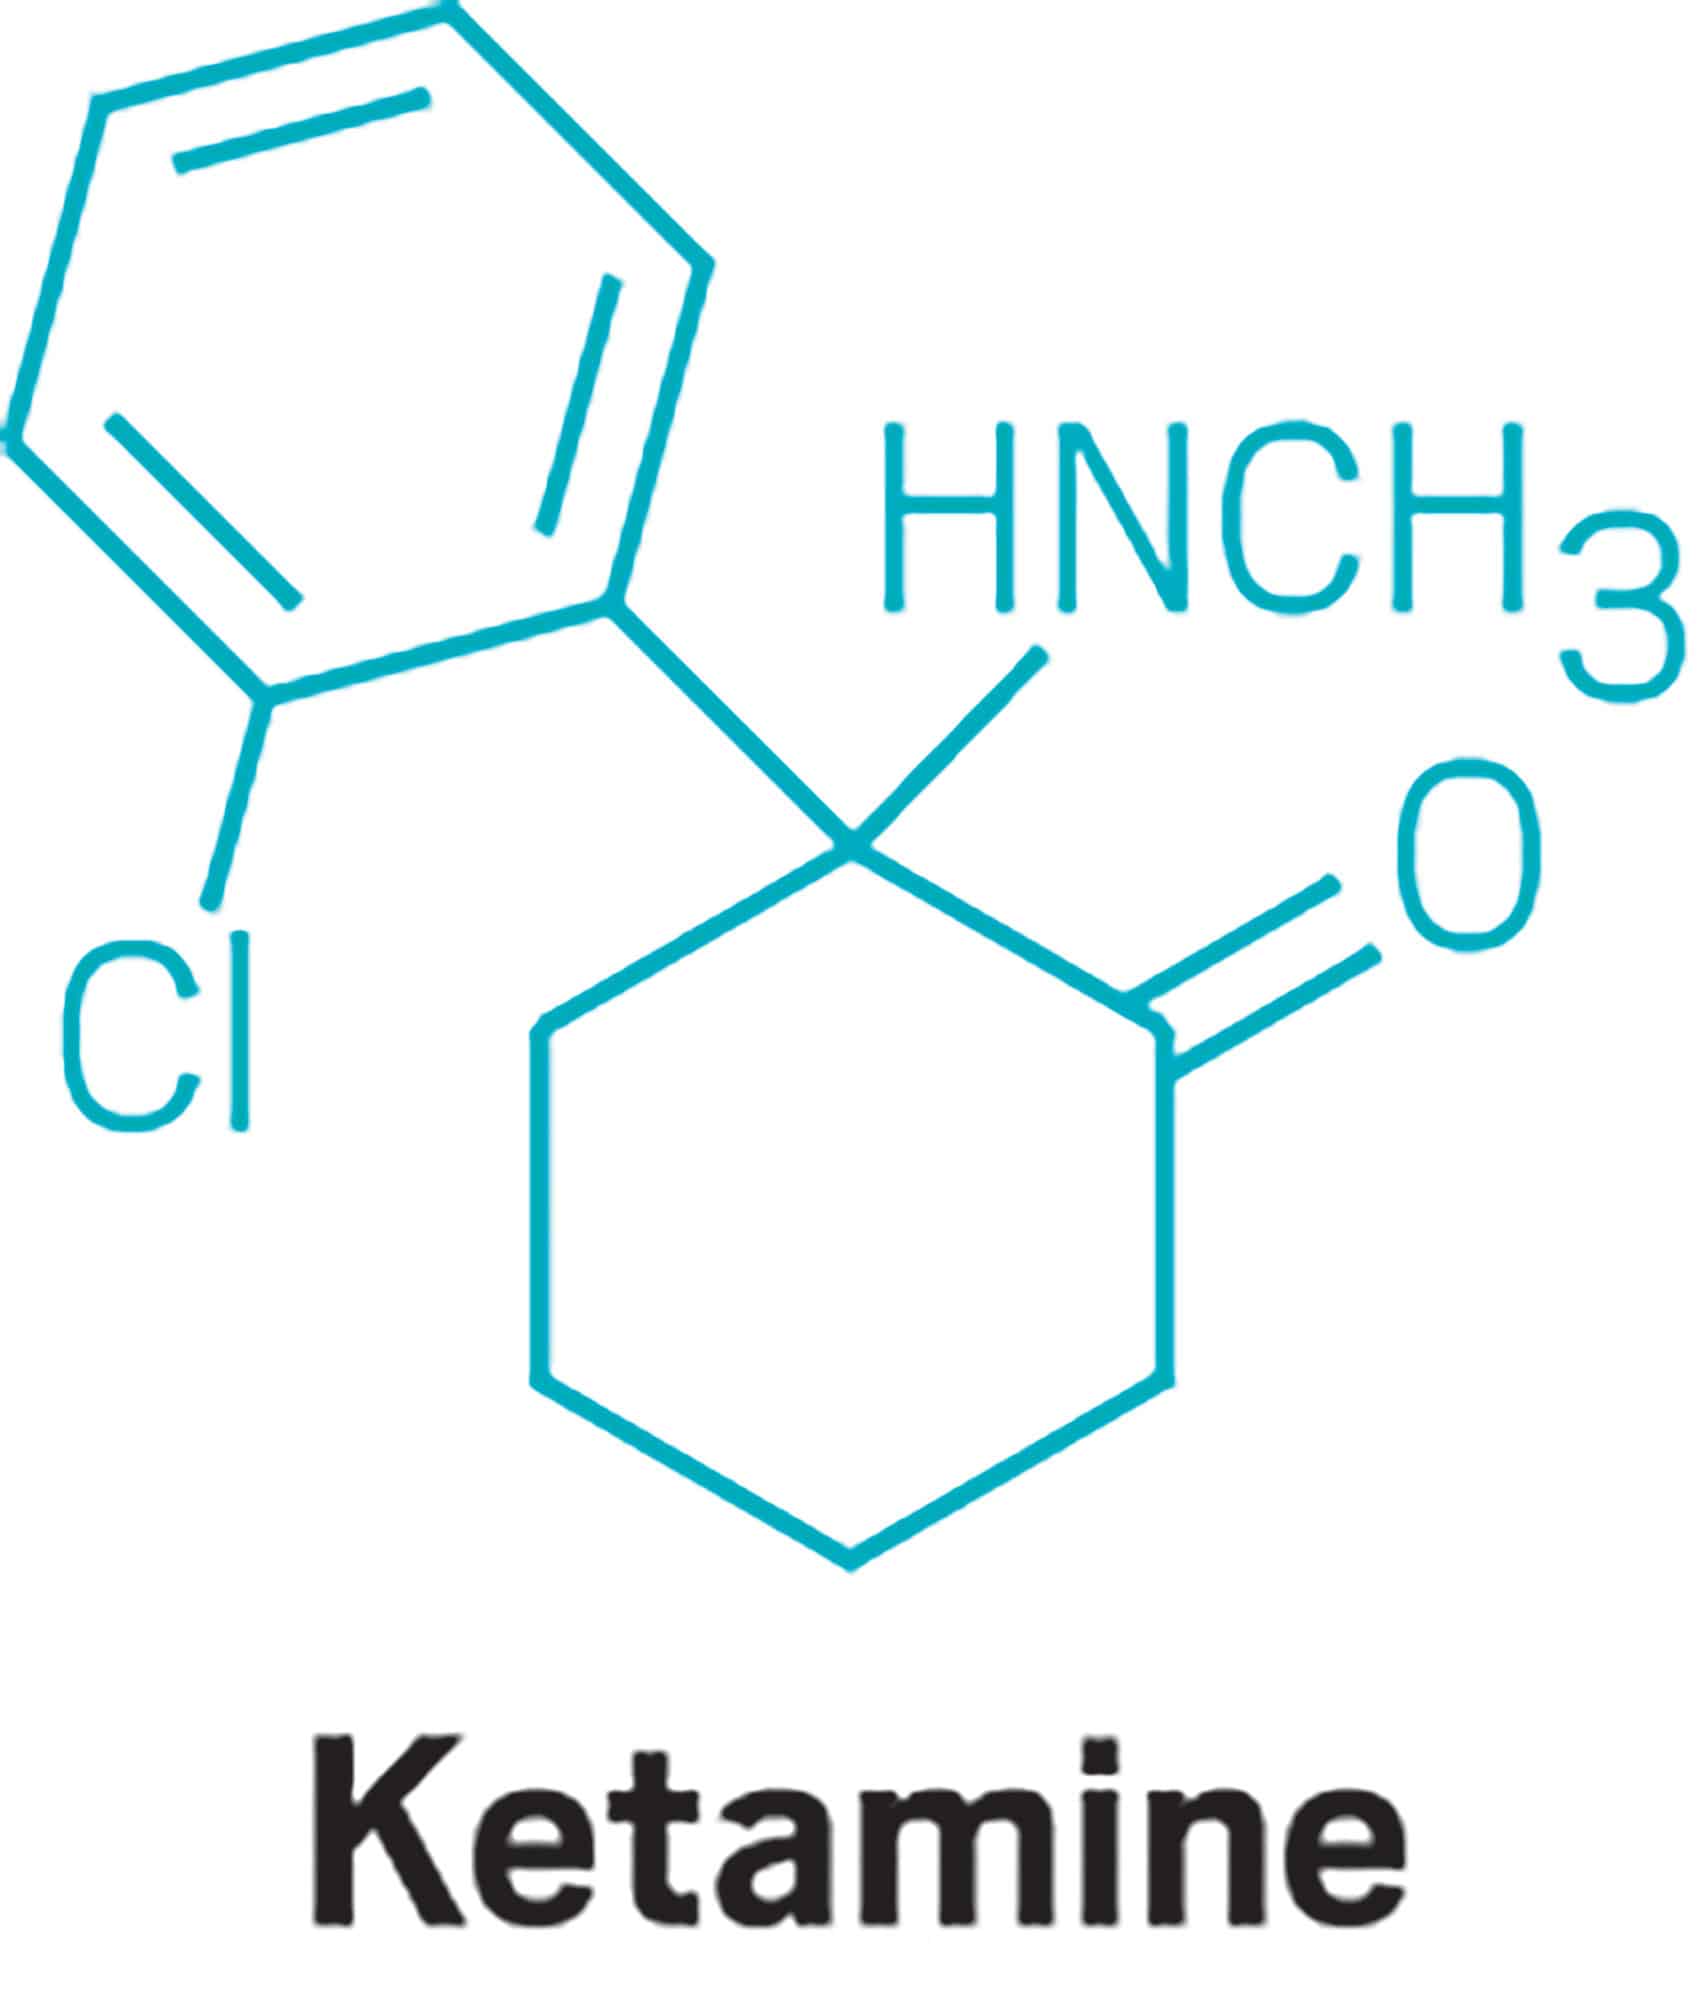 Buy ketamine hcl for Sale Online Without Prescription